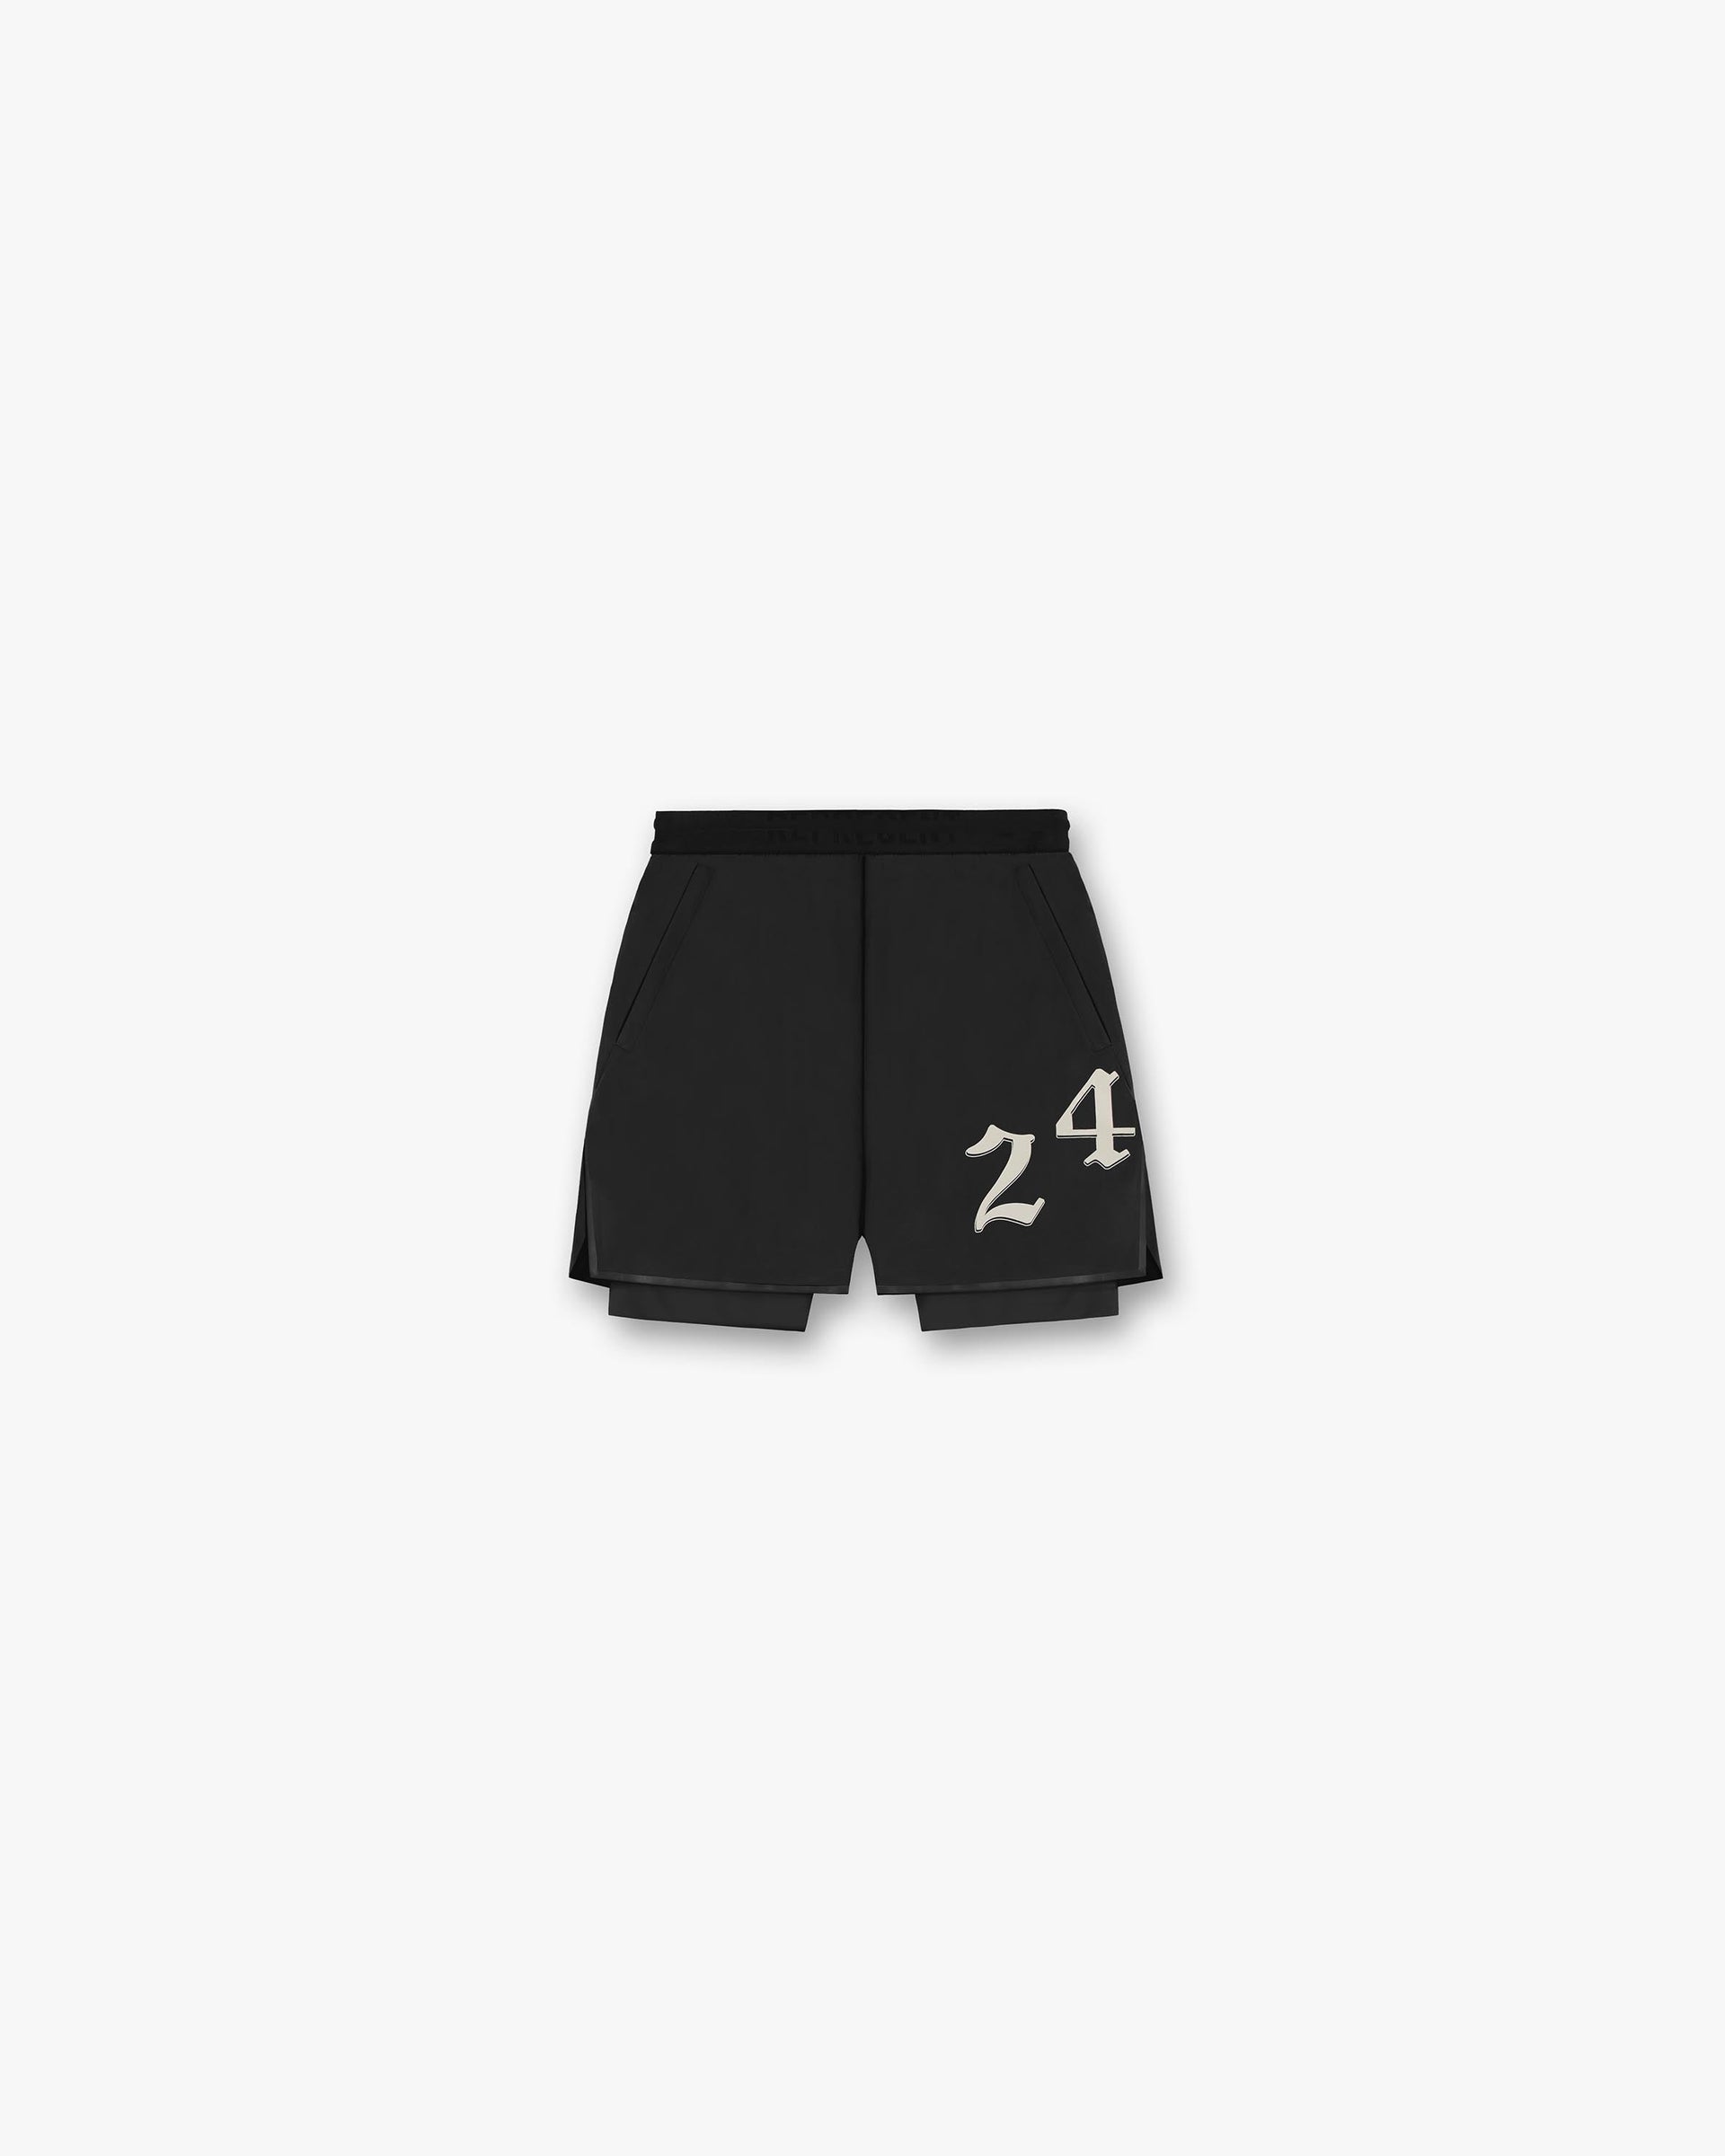 Vintage 247 2 in 1 Short | Black Papyrus Shorts 247 | Represent Clo